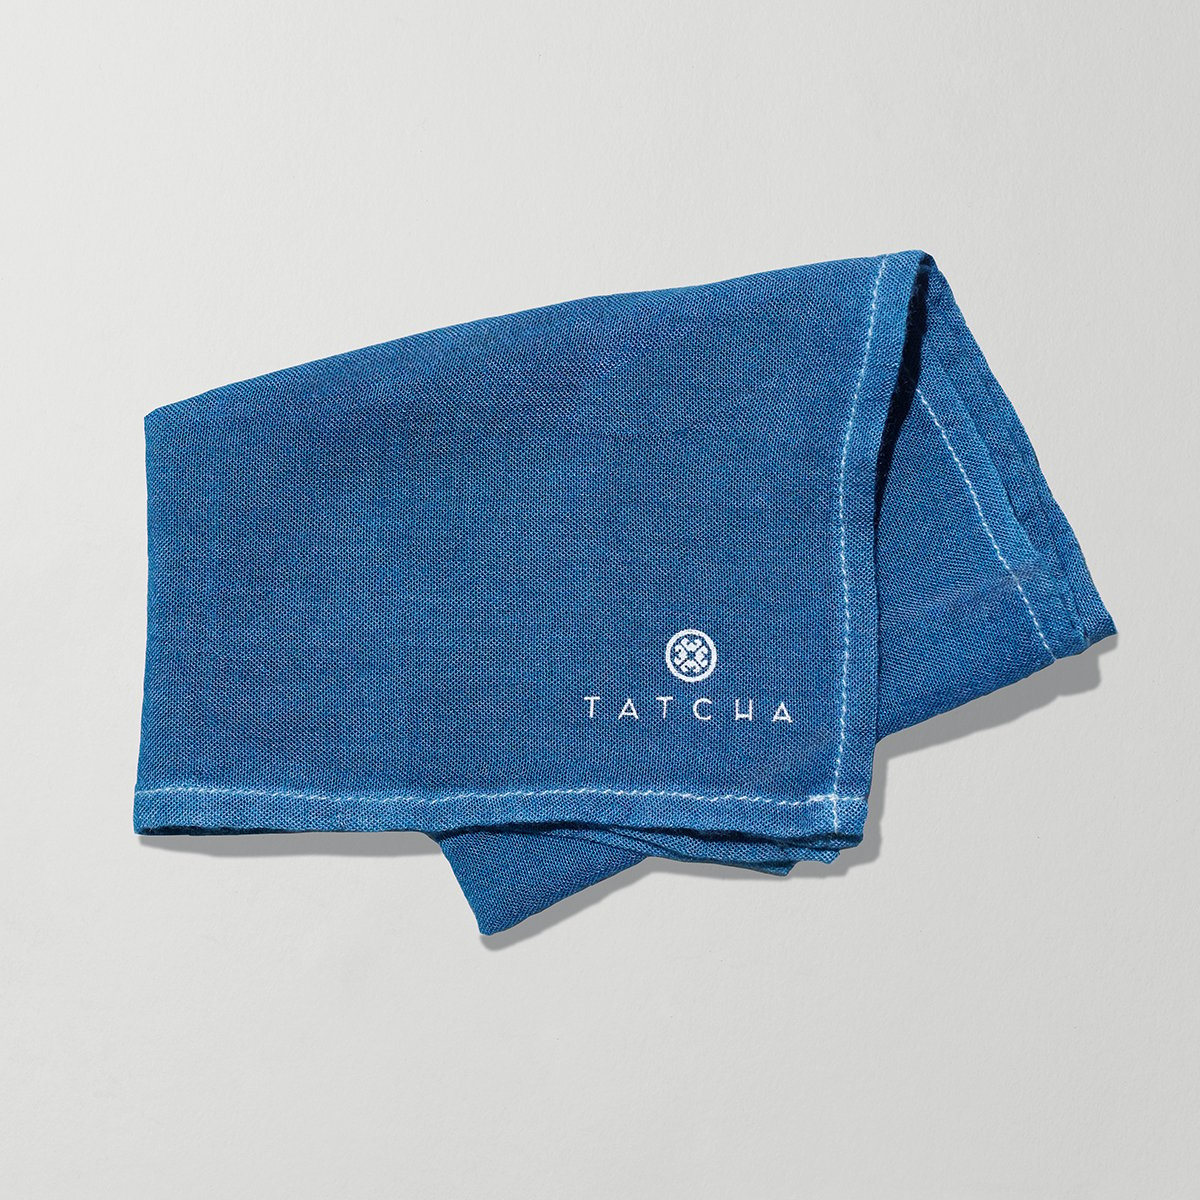 Shop Tatcha The Indigo Cleansing Cloth